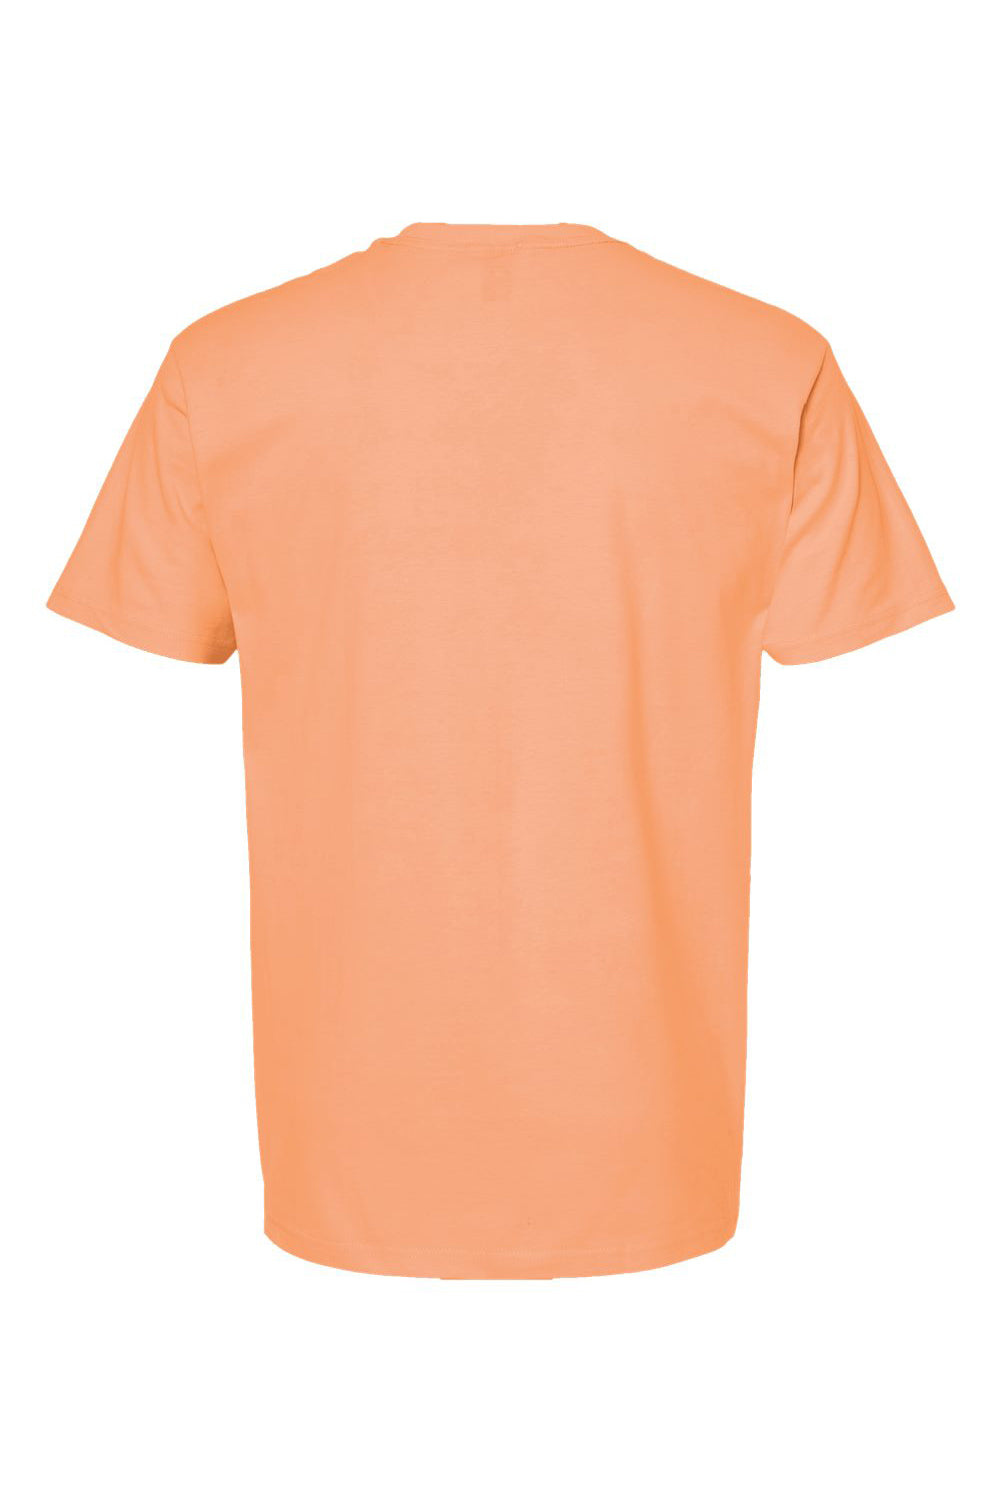 Tultex 290 Mens Jersey Short Sleeve Crewneck T-Shirt Cantaloupe Orange Flat Back